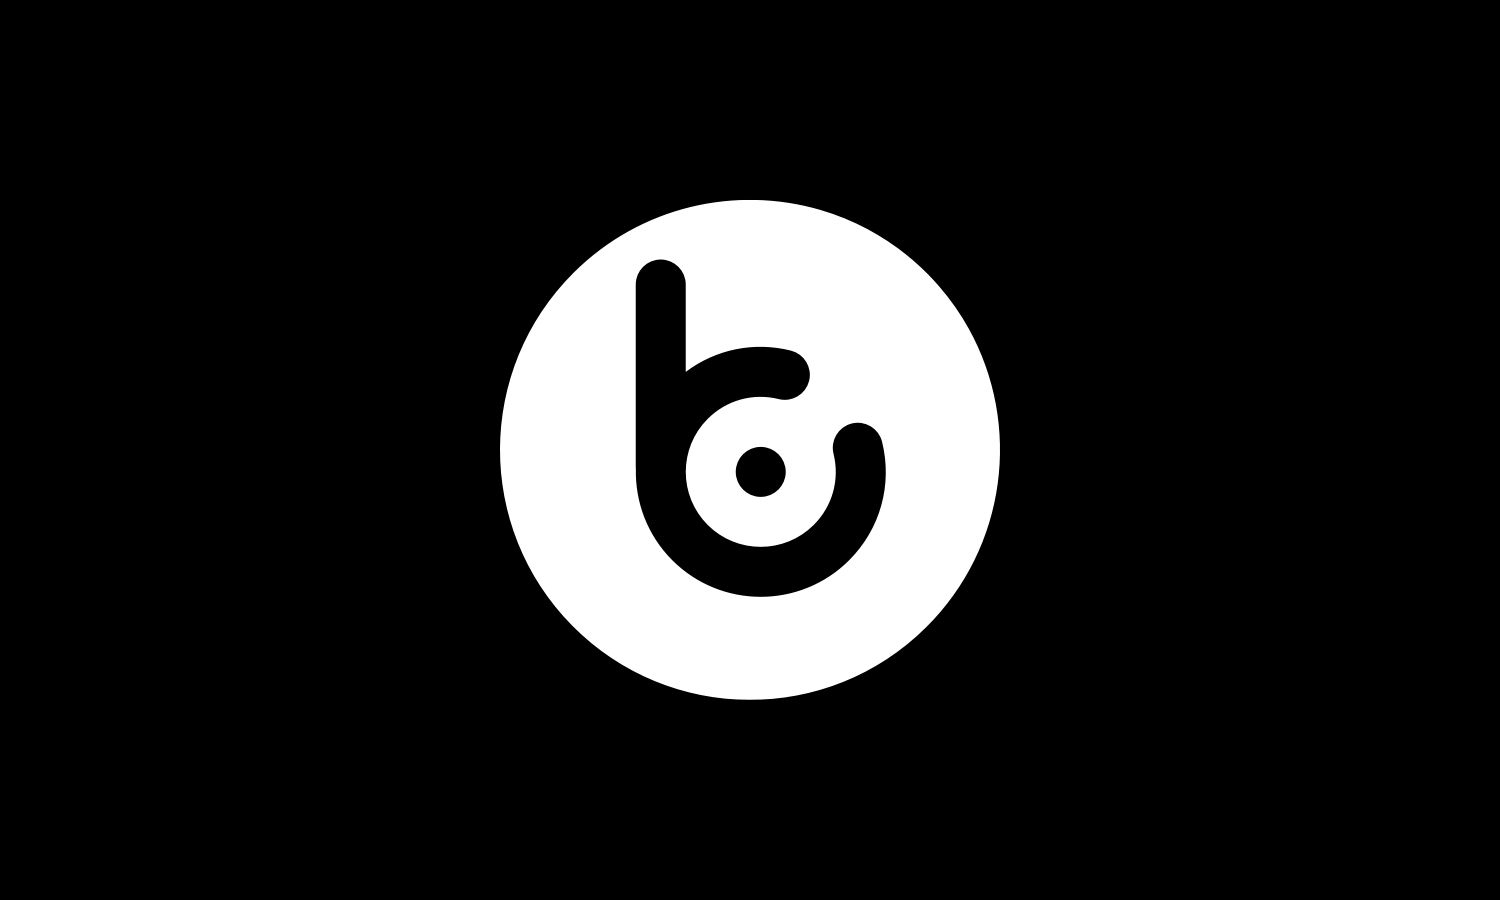 brate logo symbol white